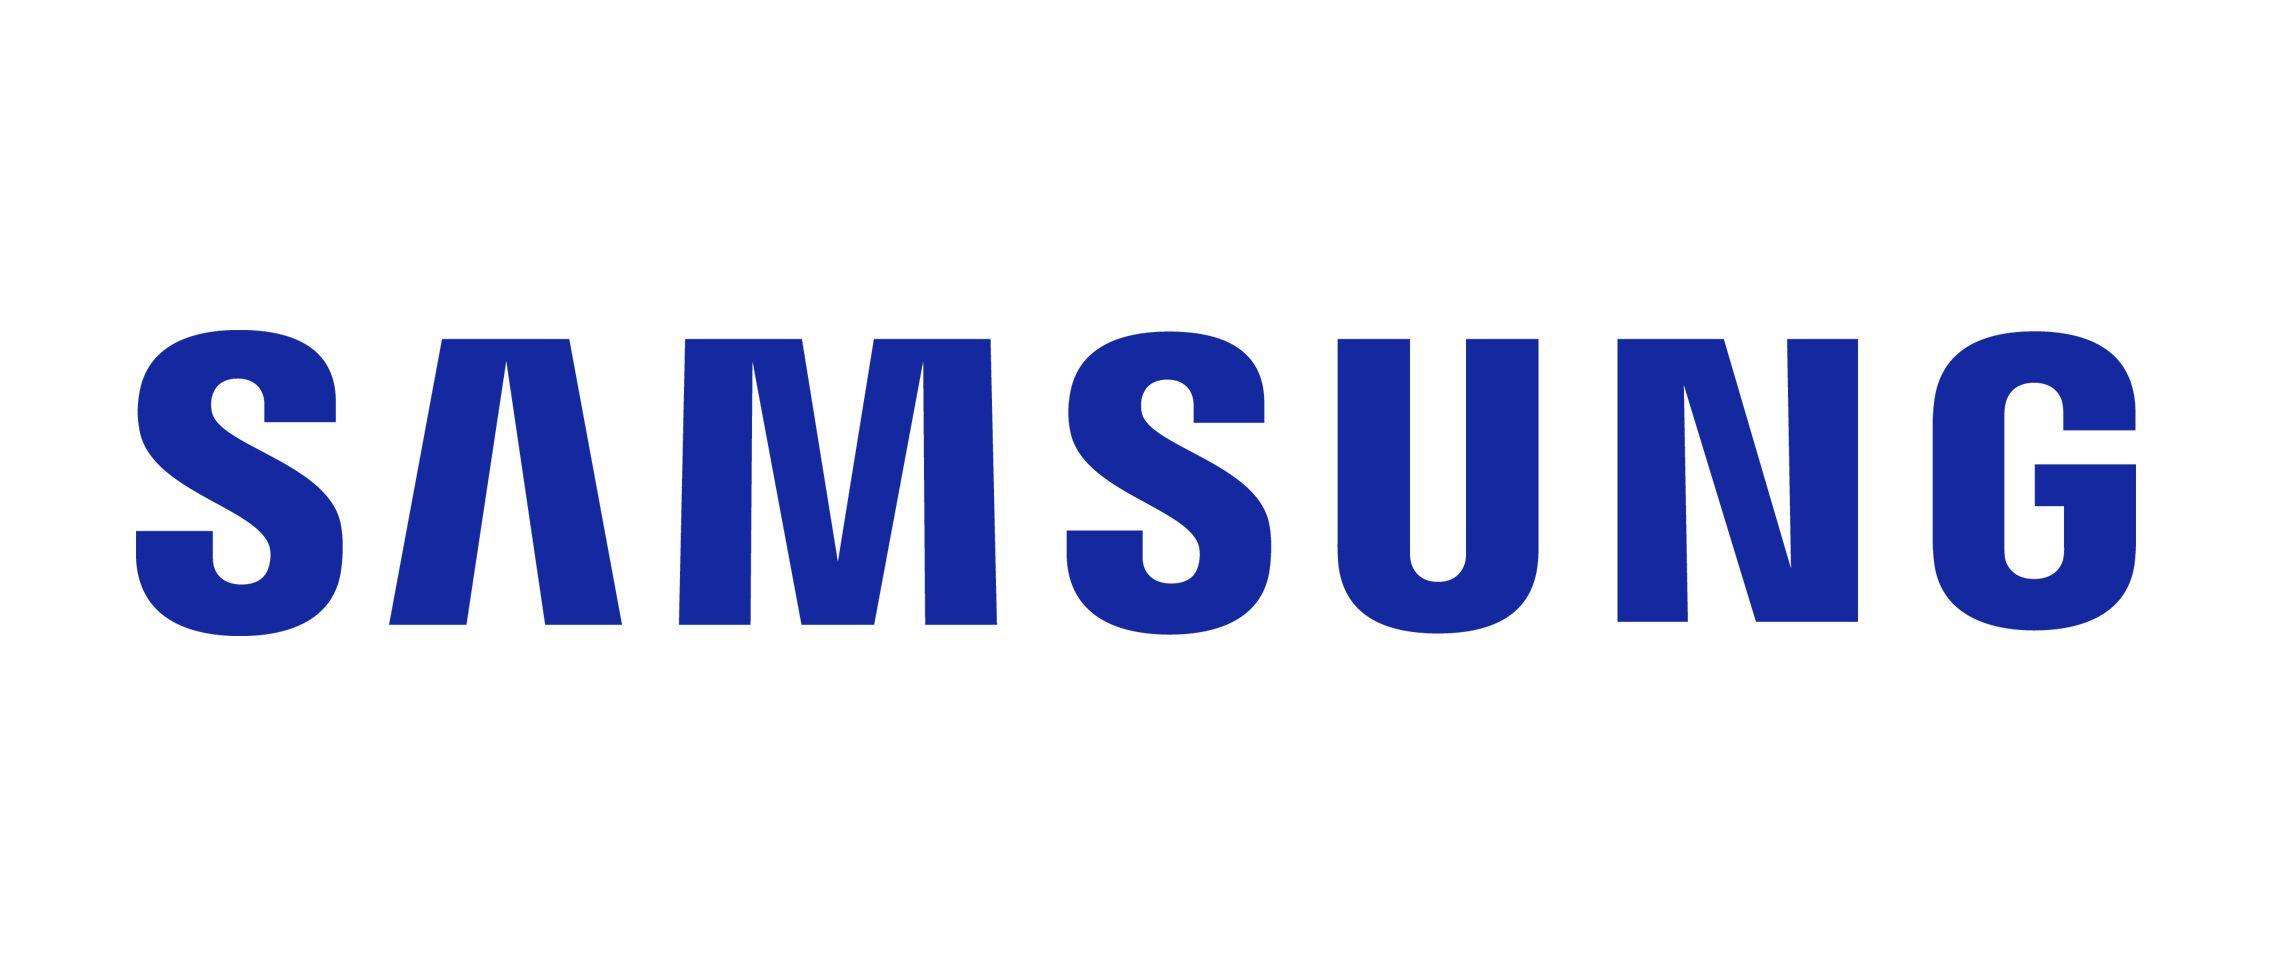 Samsung Company Logo - Samsung Logo, Samsung Symbol, Meaning, History and Evolution